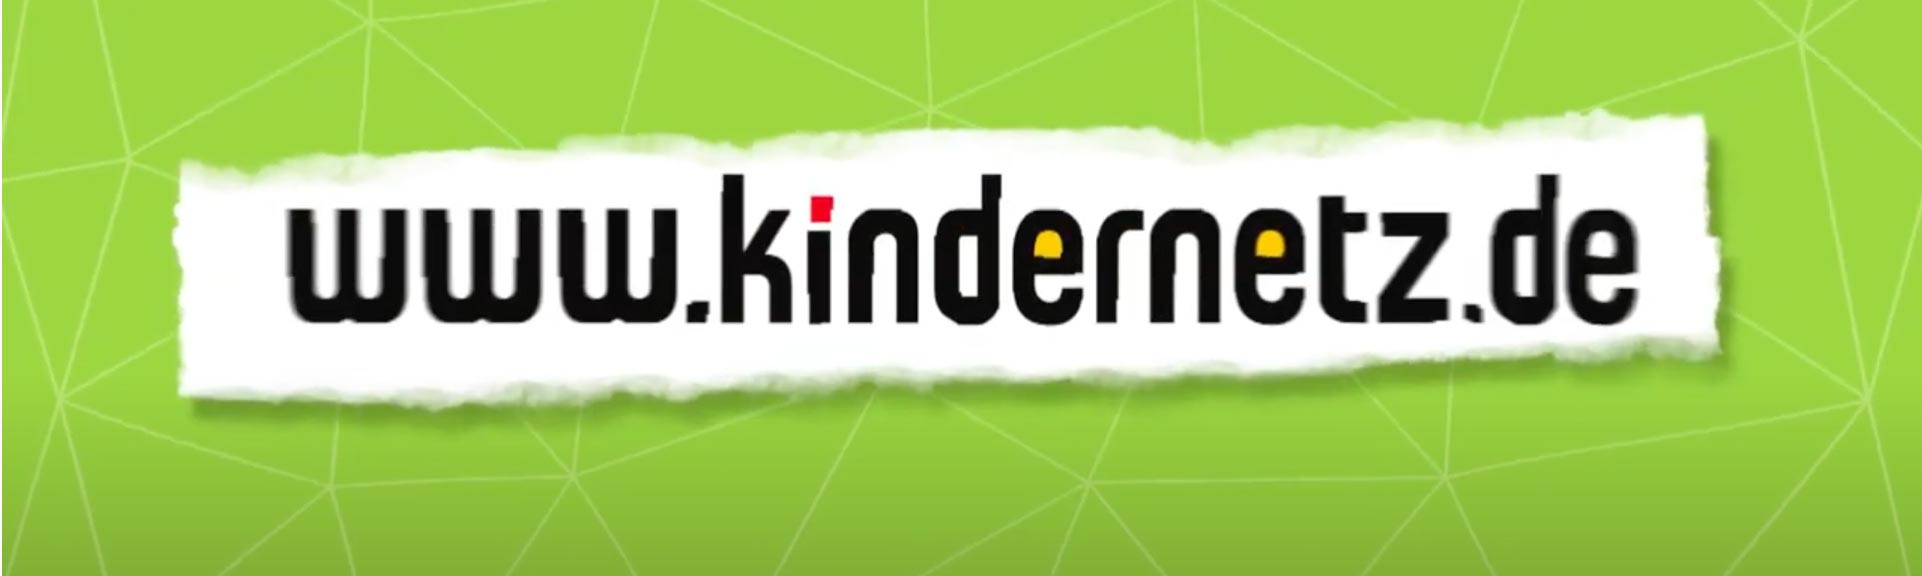 www kindernetz de